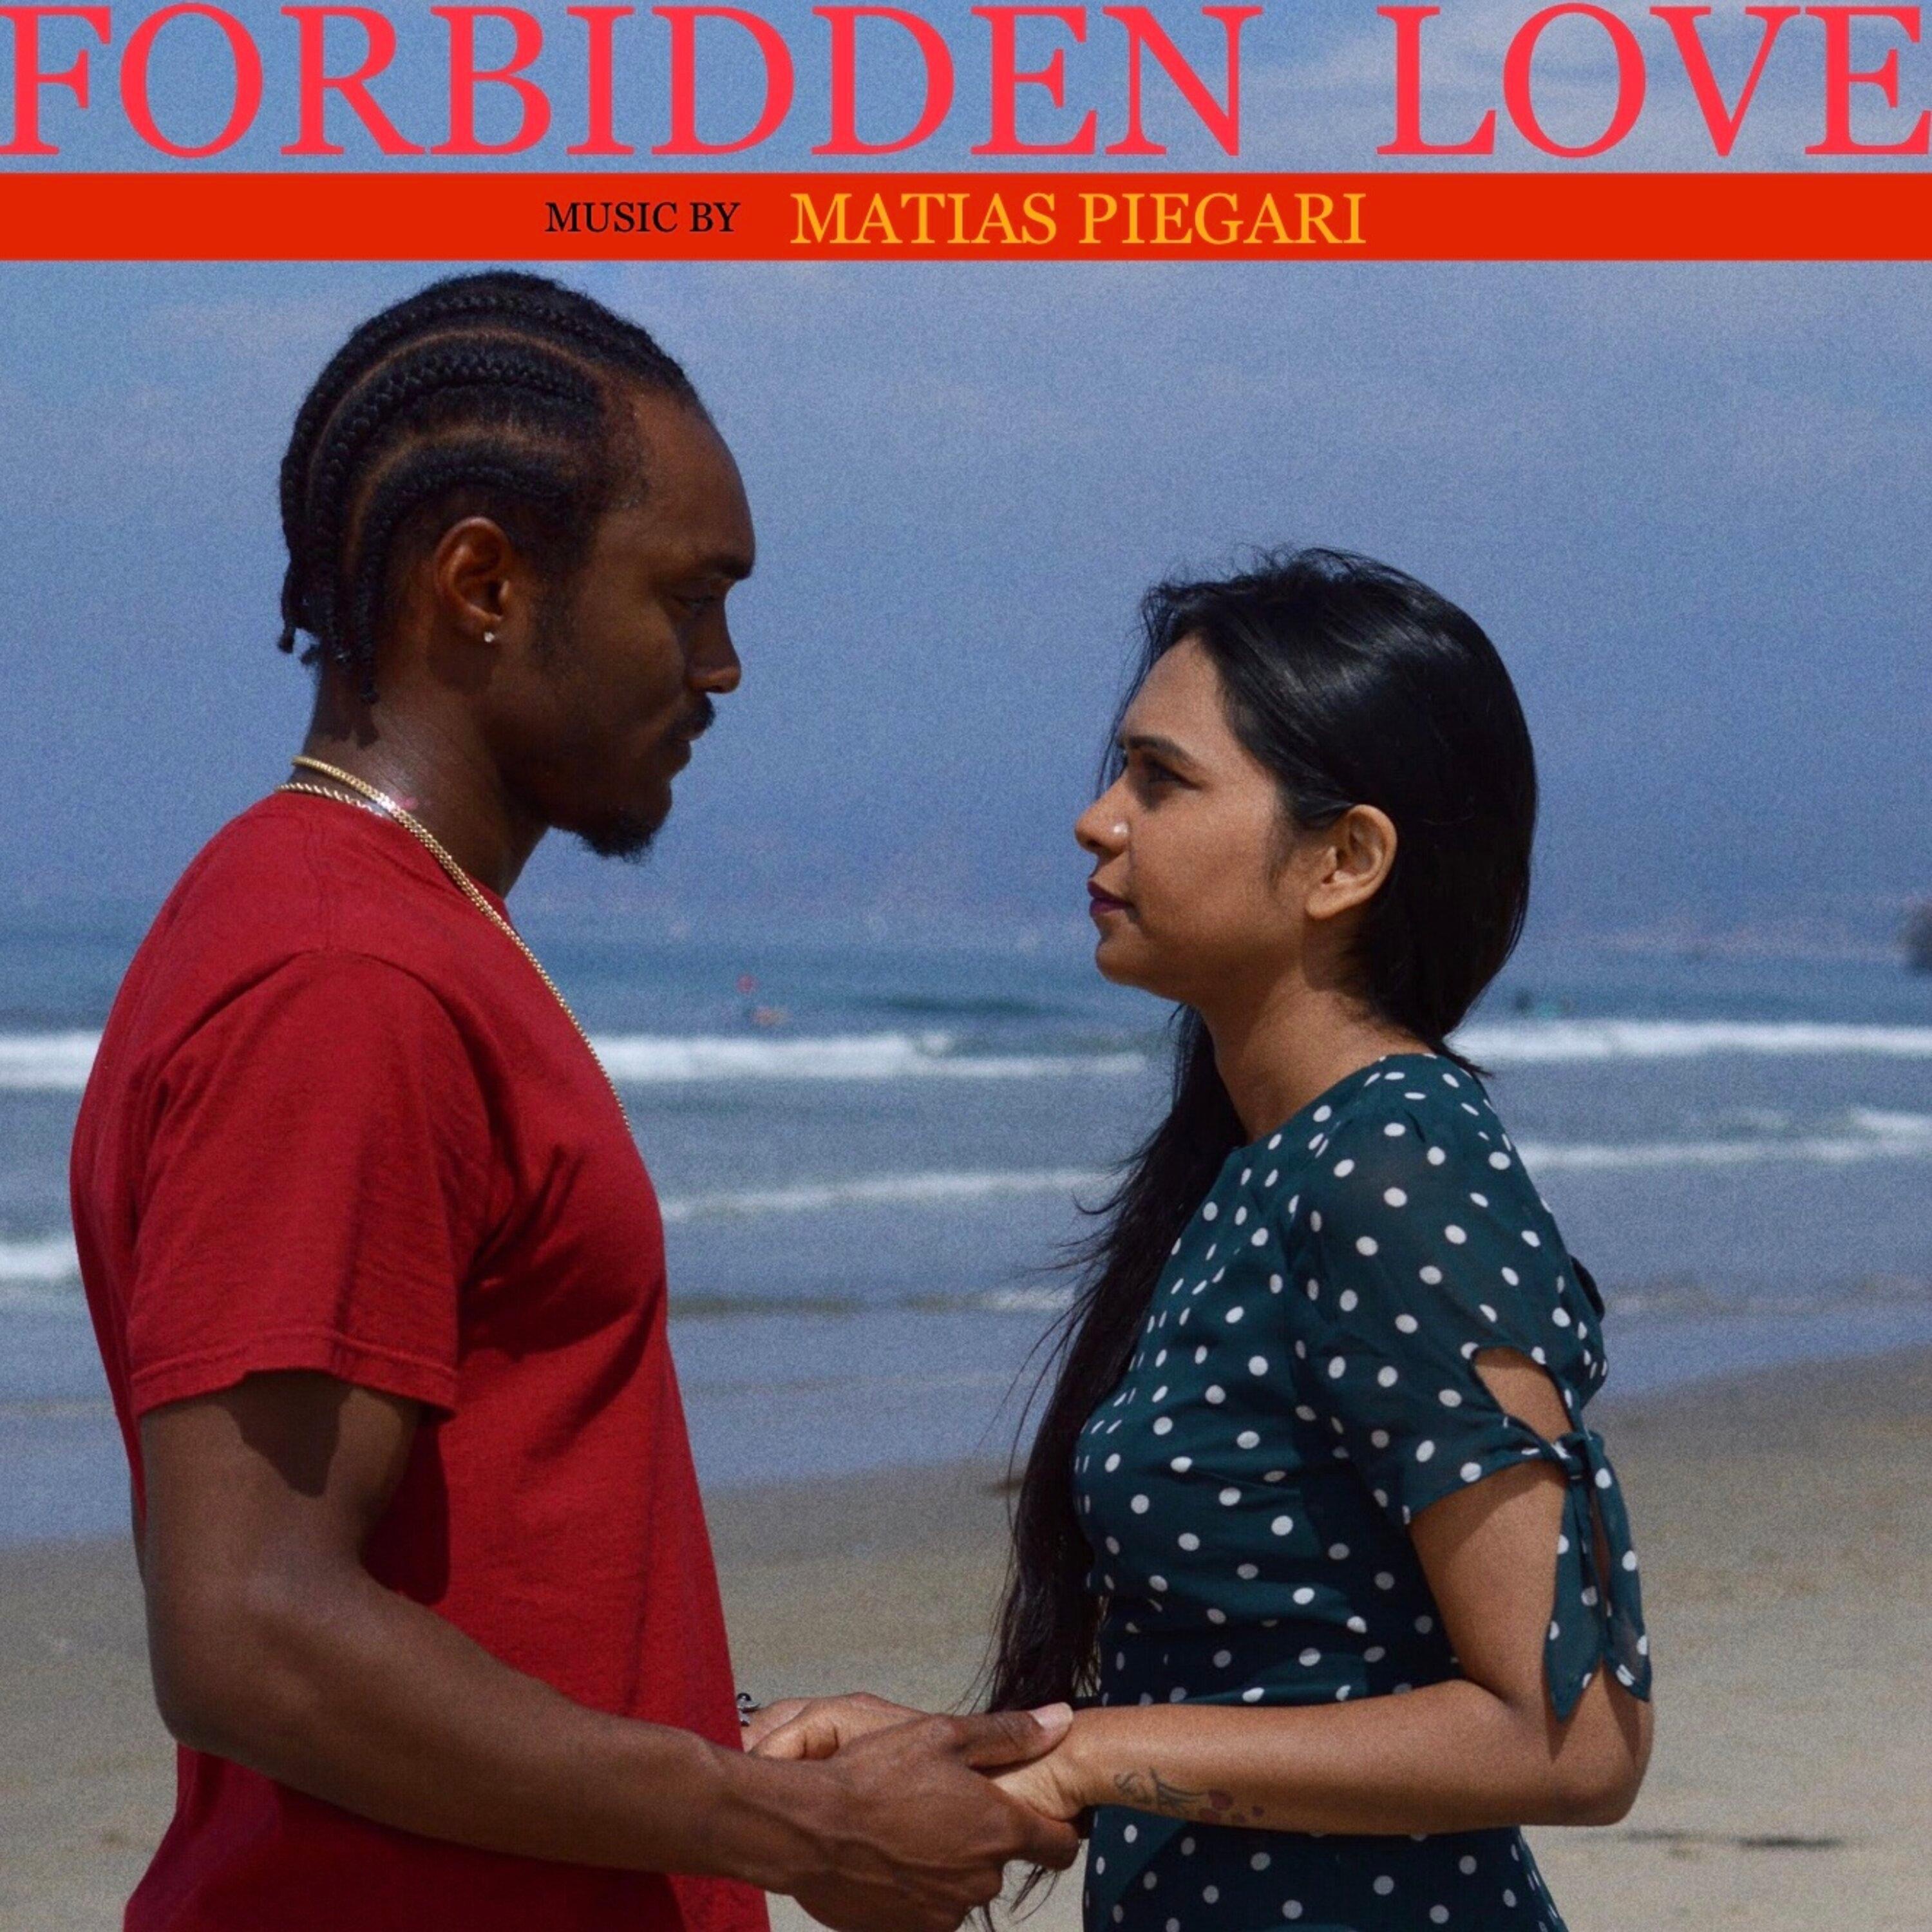 Измена запретная любовь. Forbidden Love 1977. Forbidden Love картинки. Forbidden Love 2020 movie.